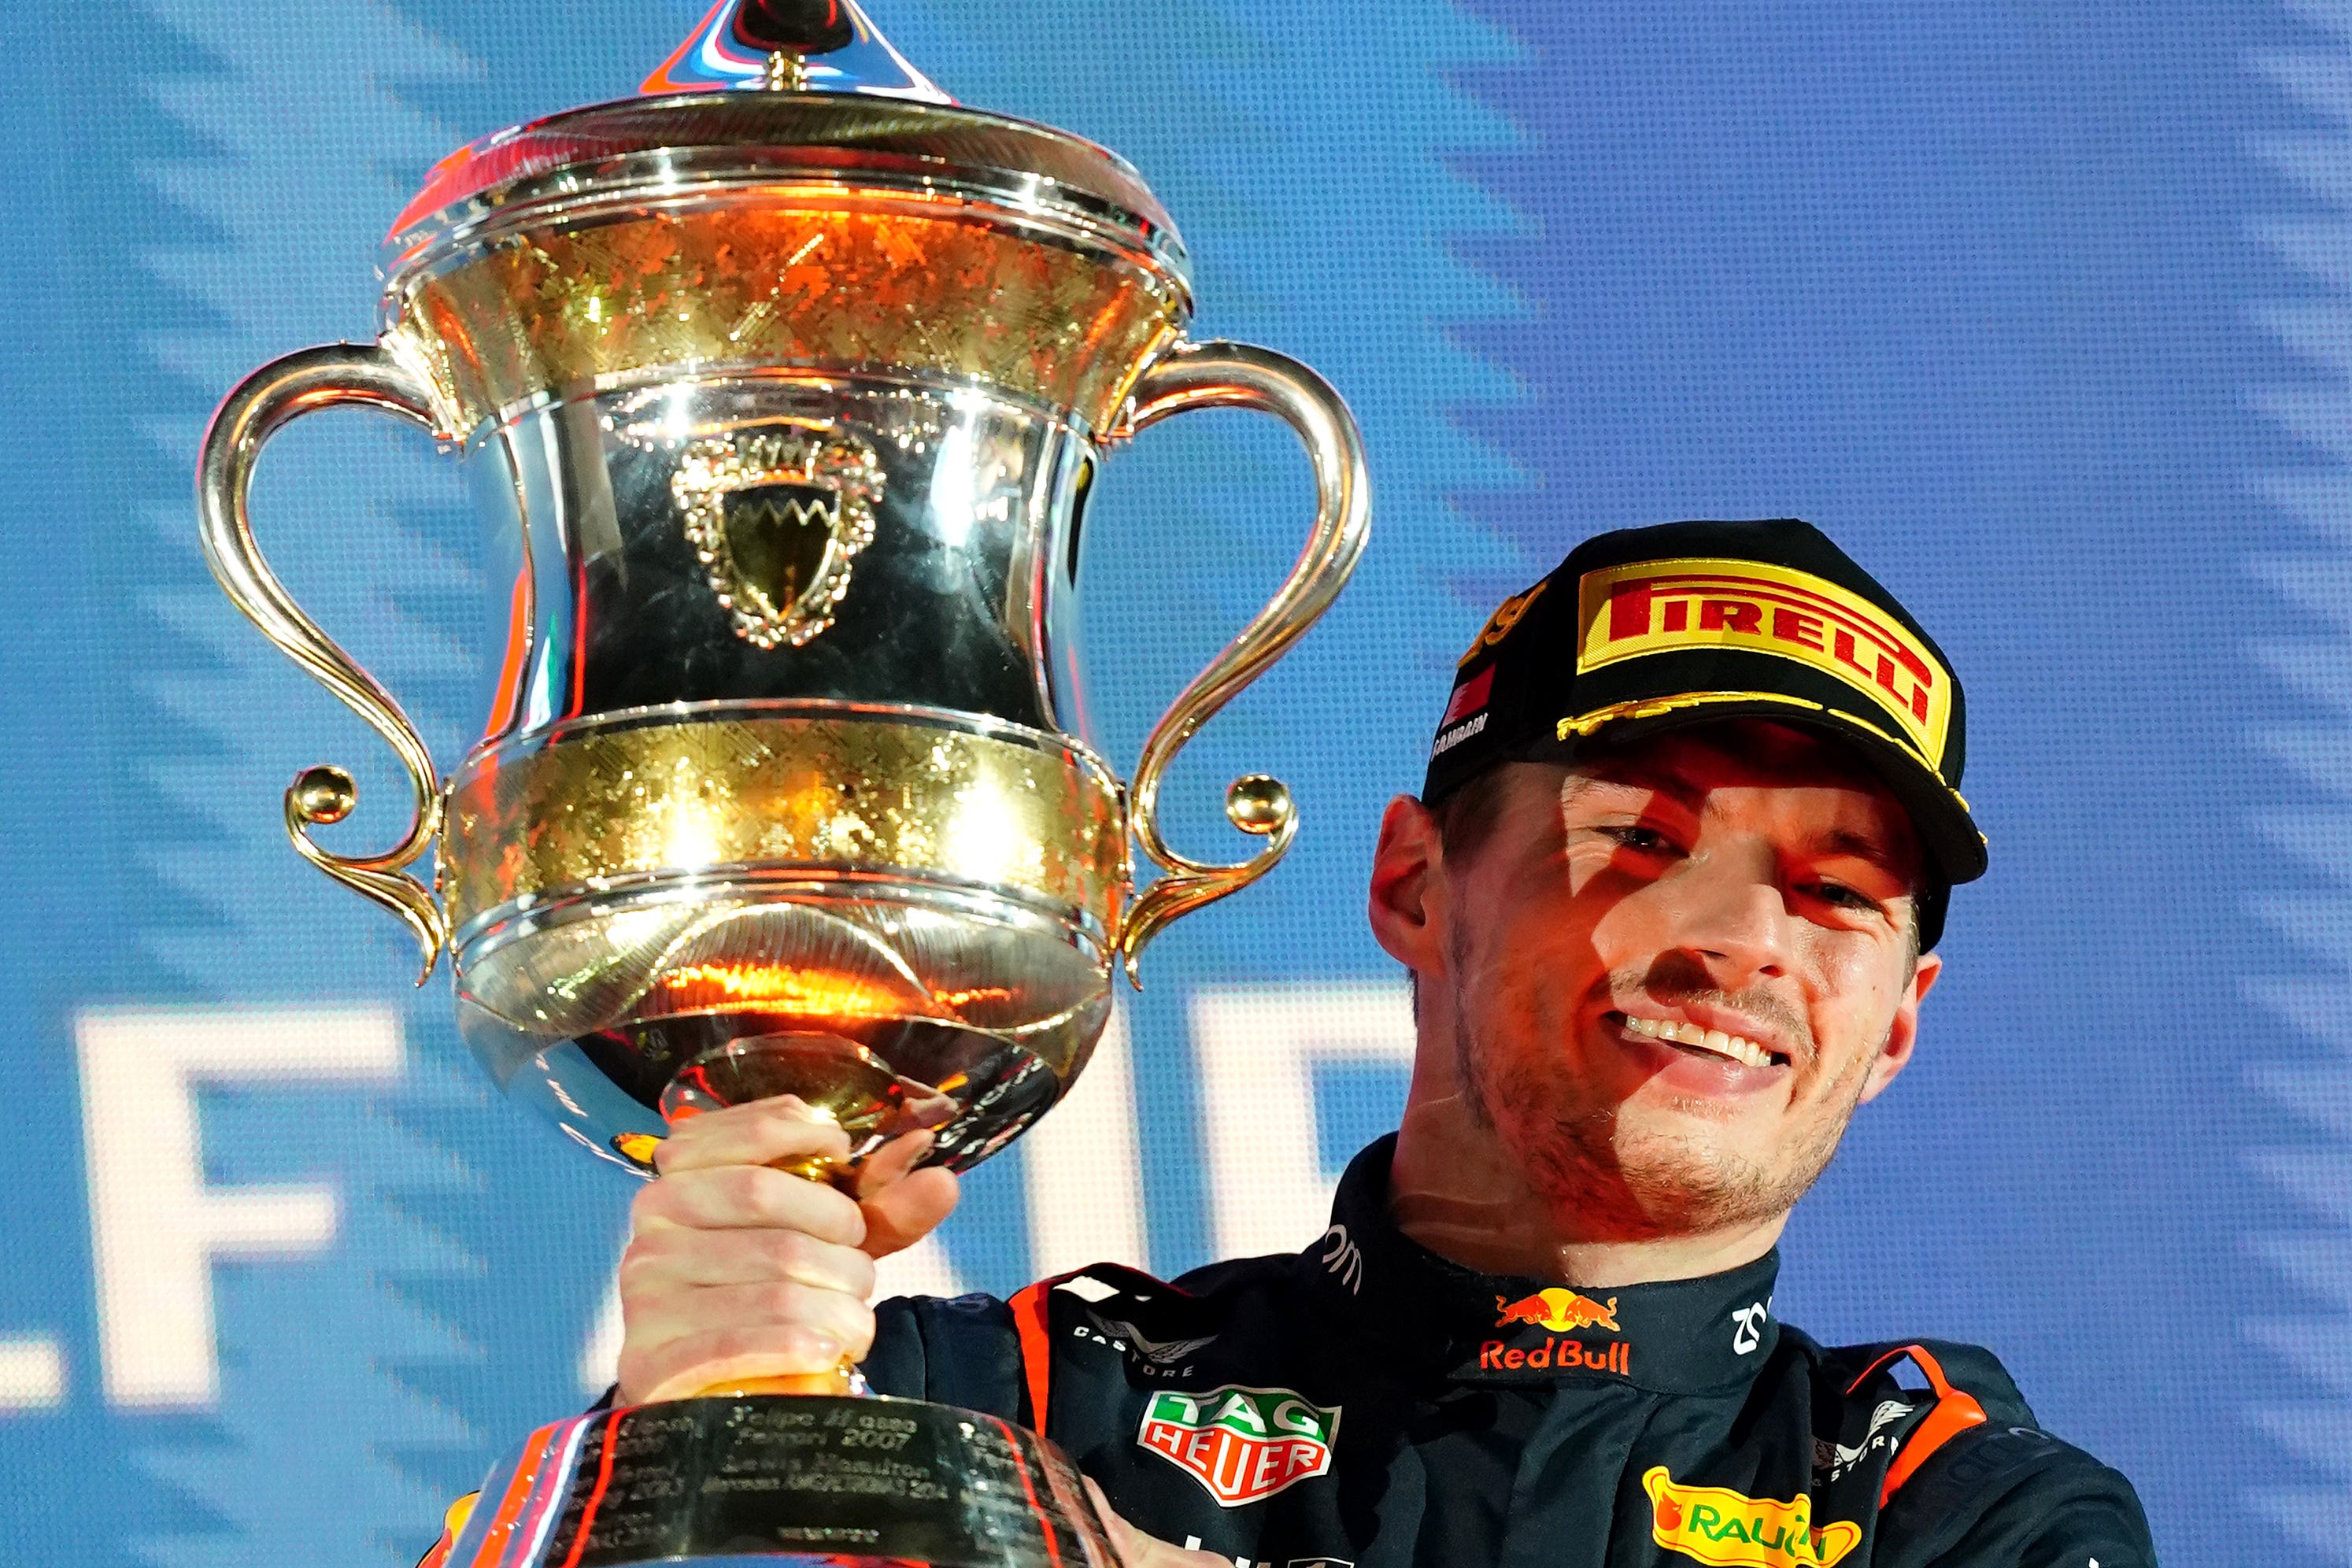 Max Verstappen won Sunday’s Bahrain Grand Prix